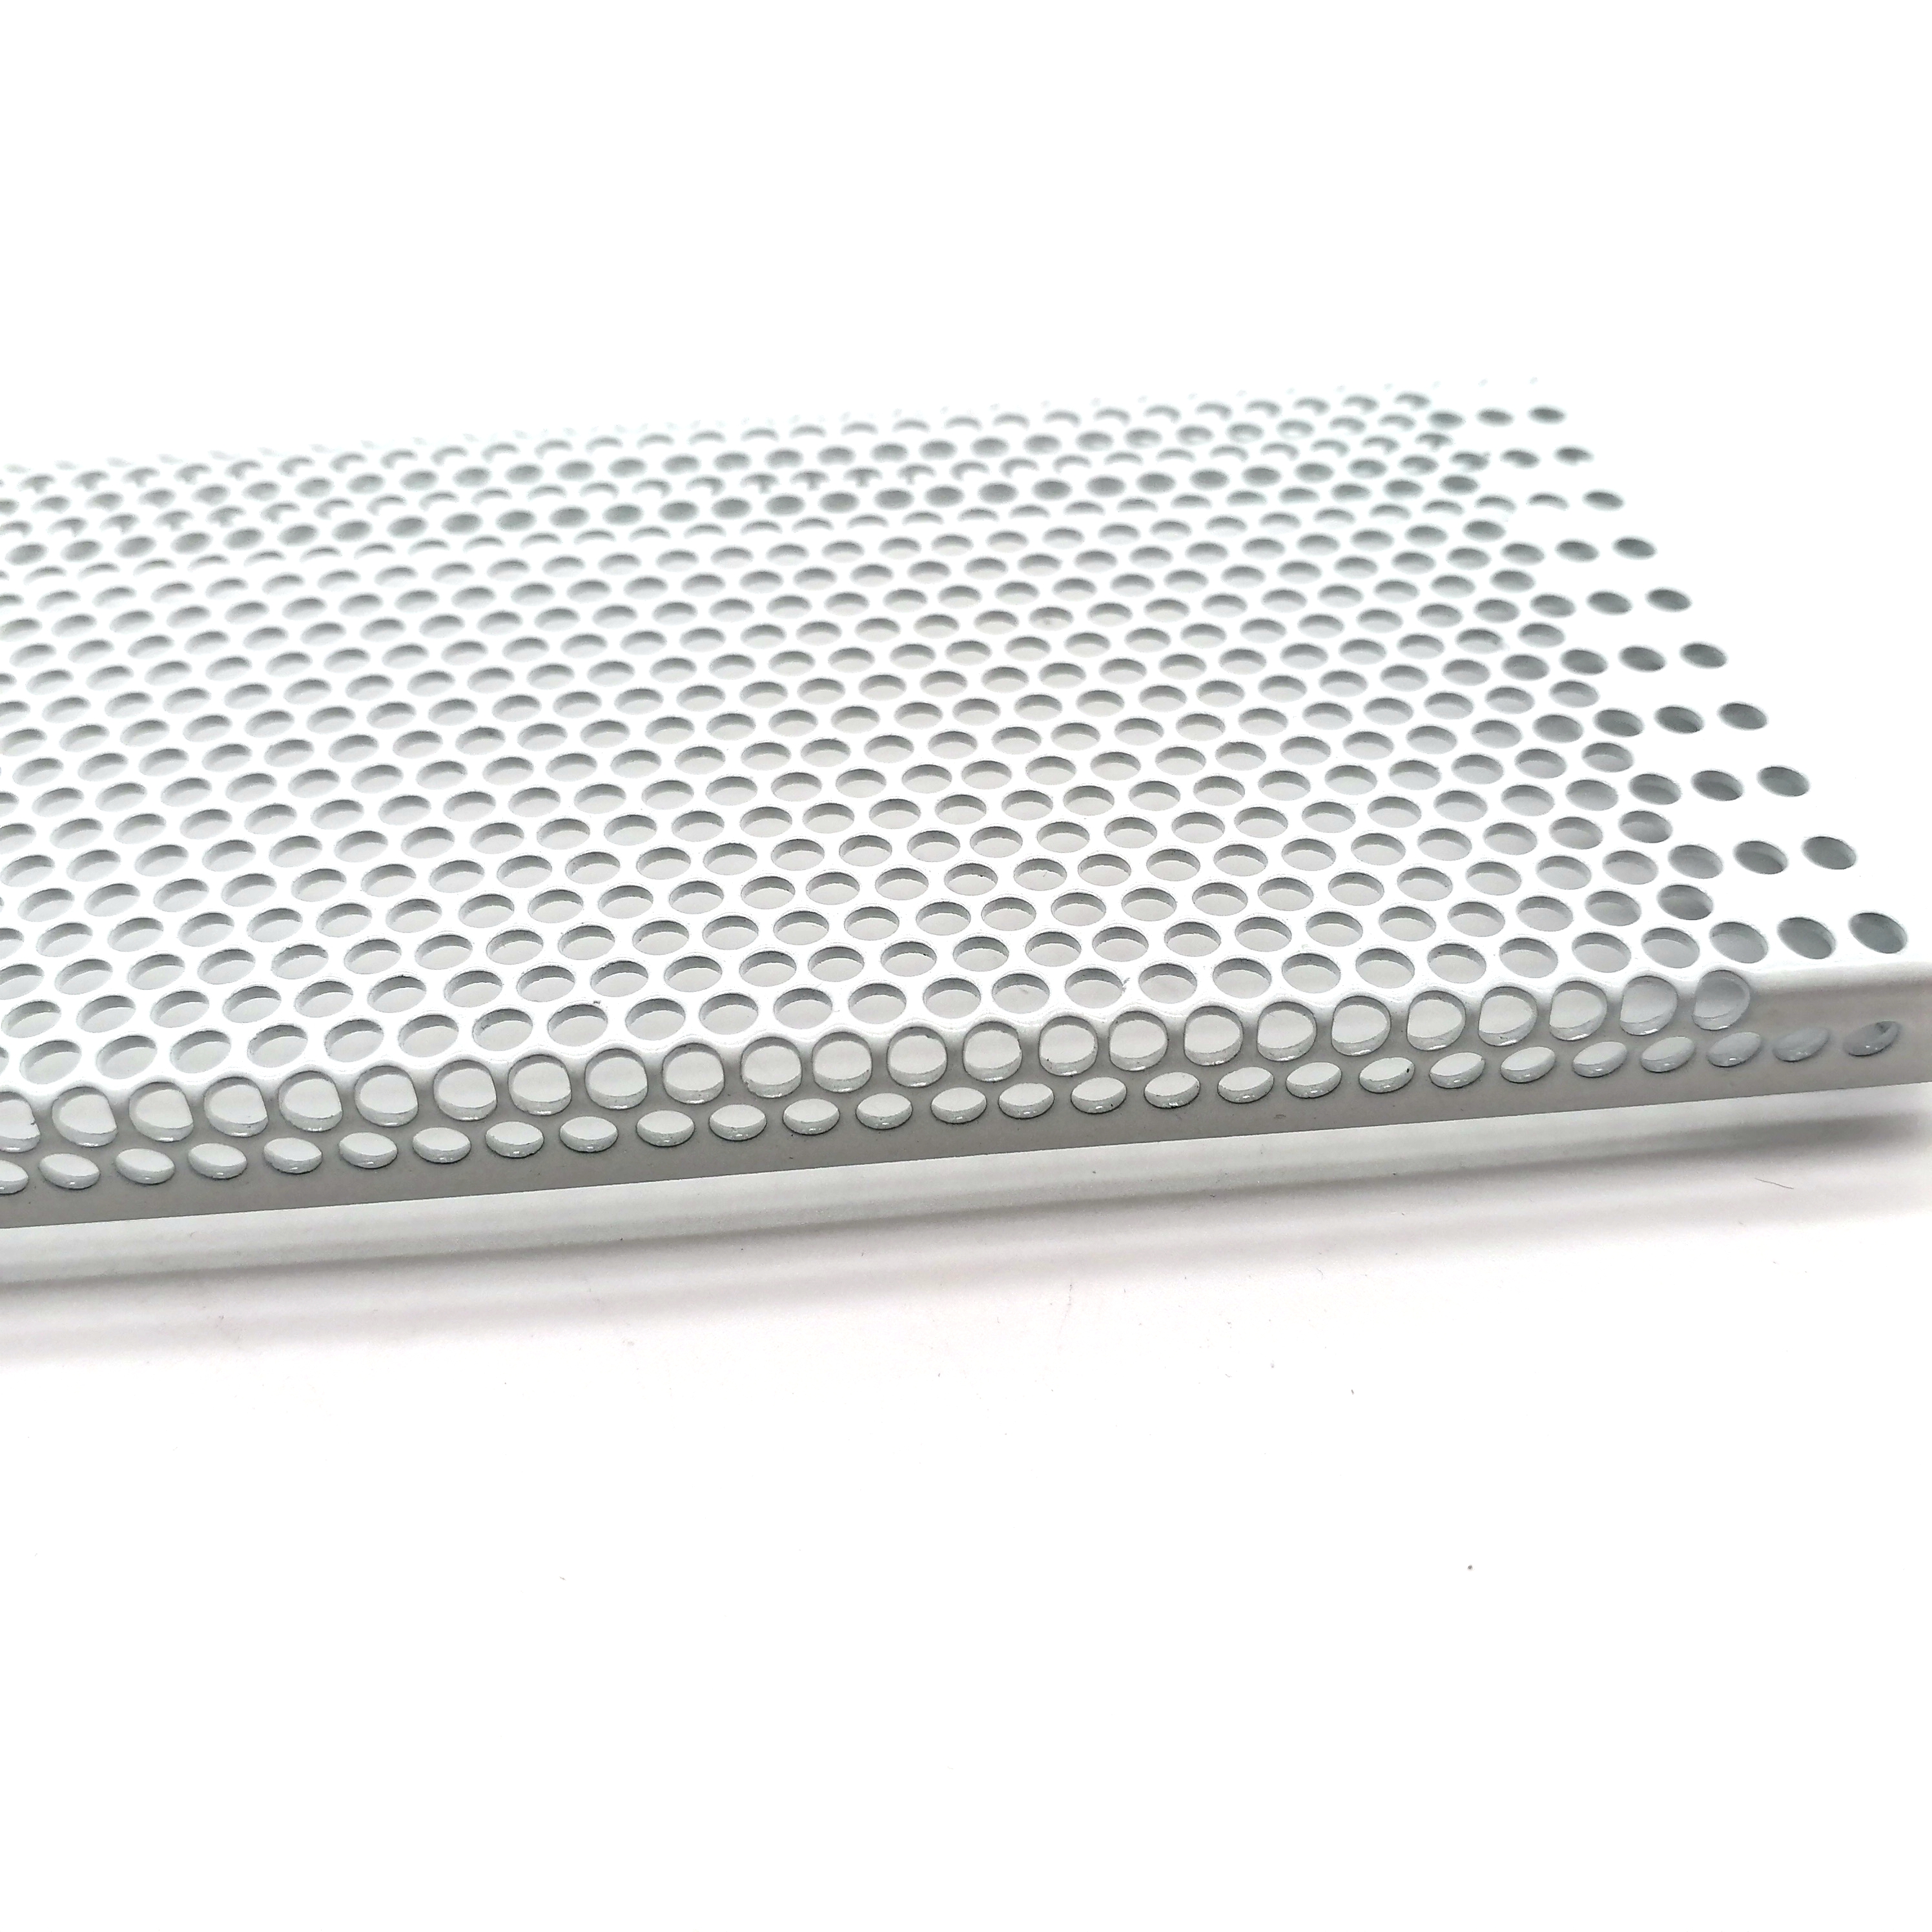 2019 wholesale price Stainless Steel Perforated Sheet - Perforated metal mesh speaker grill material speaker box mesh – Dongjie